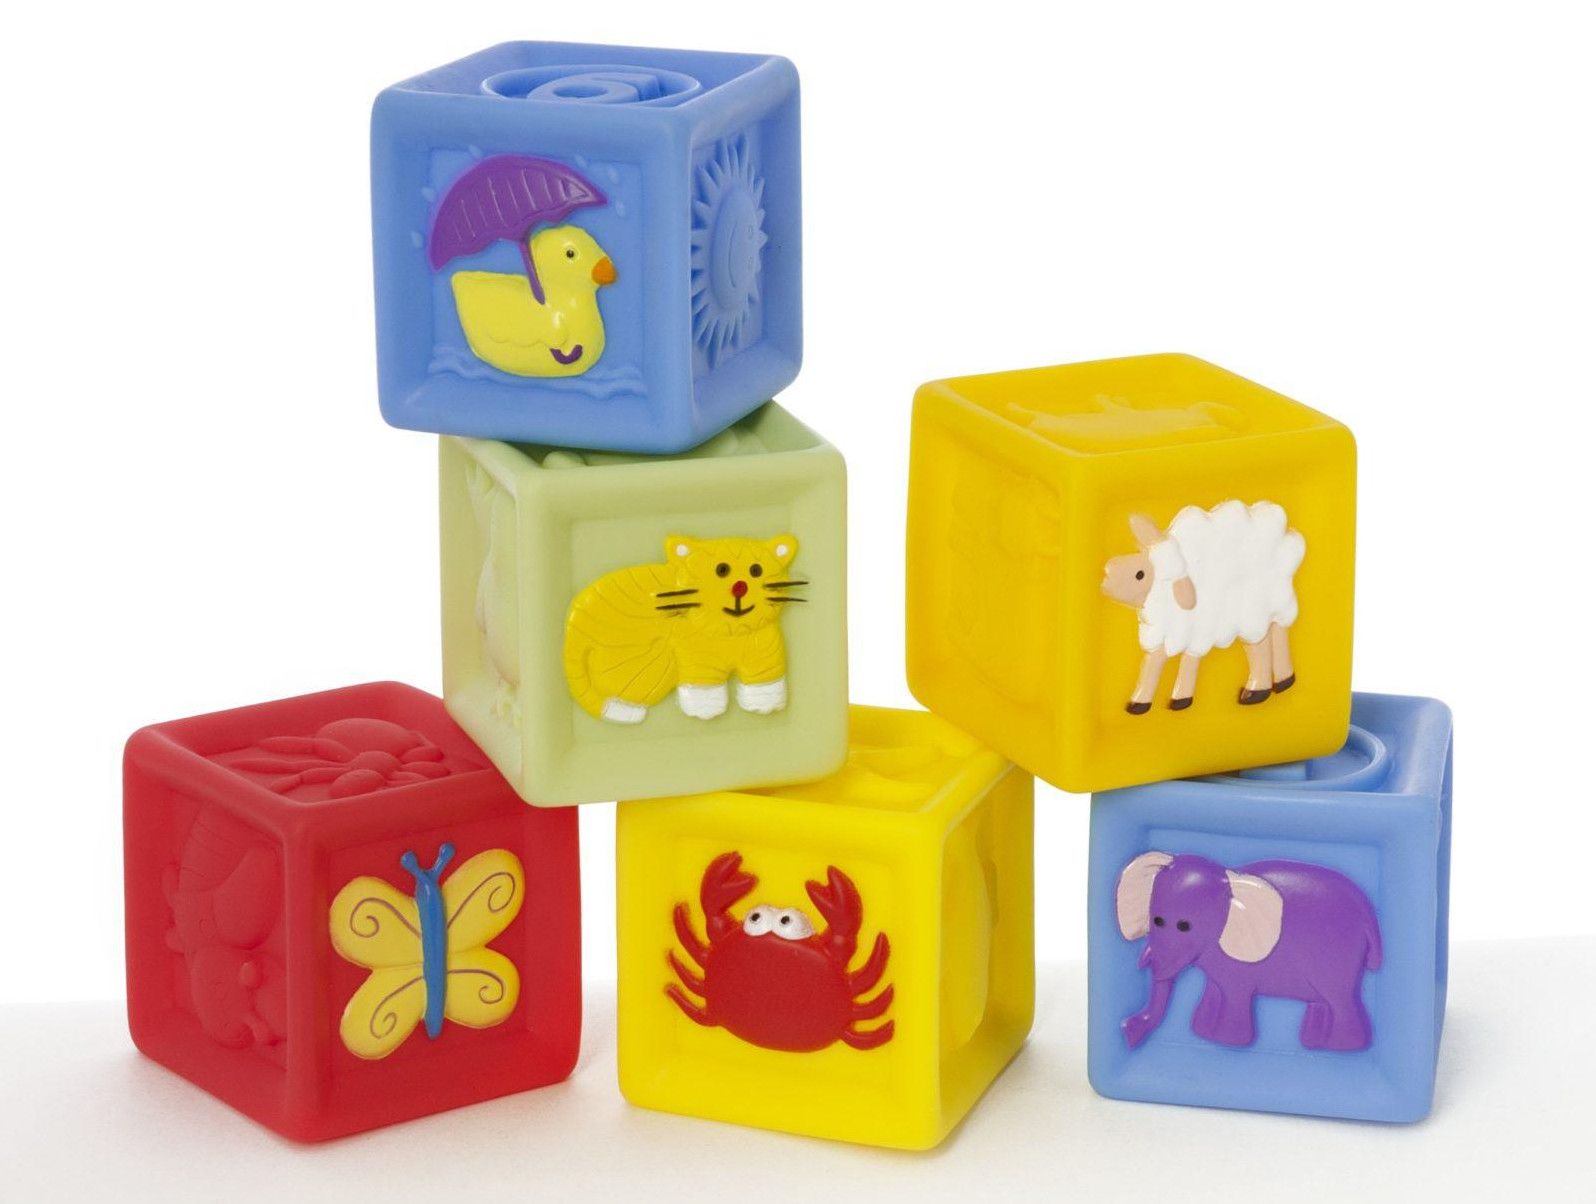 Cube детские. Кубики "игрушки". Детские кубики. Игрушка детская кубики. Разноцветные кубики.